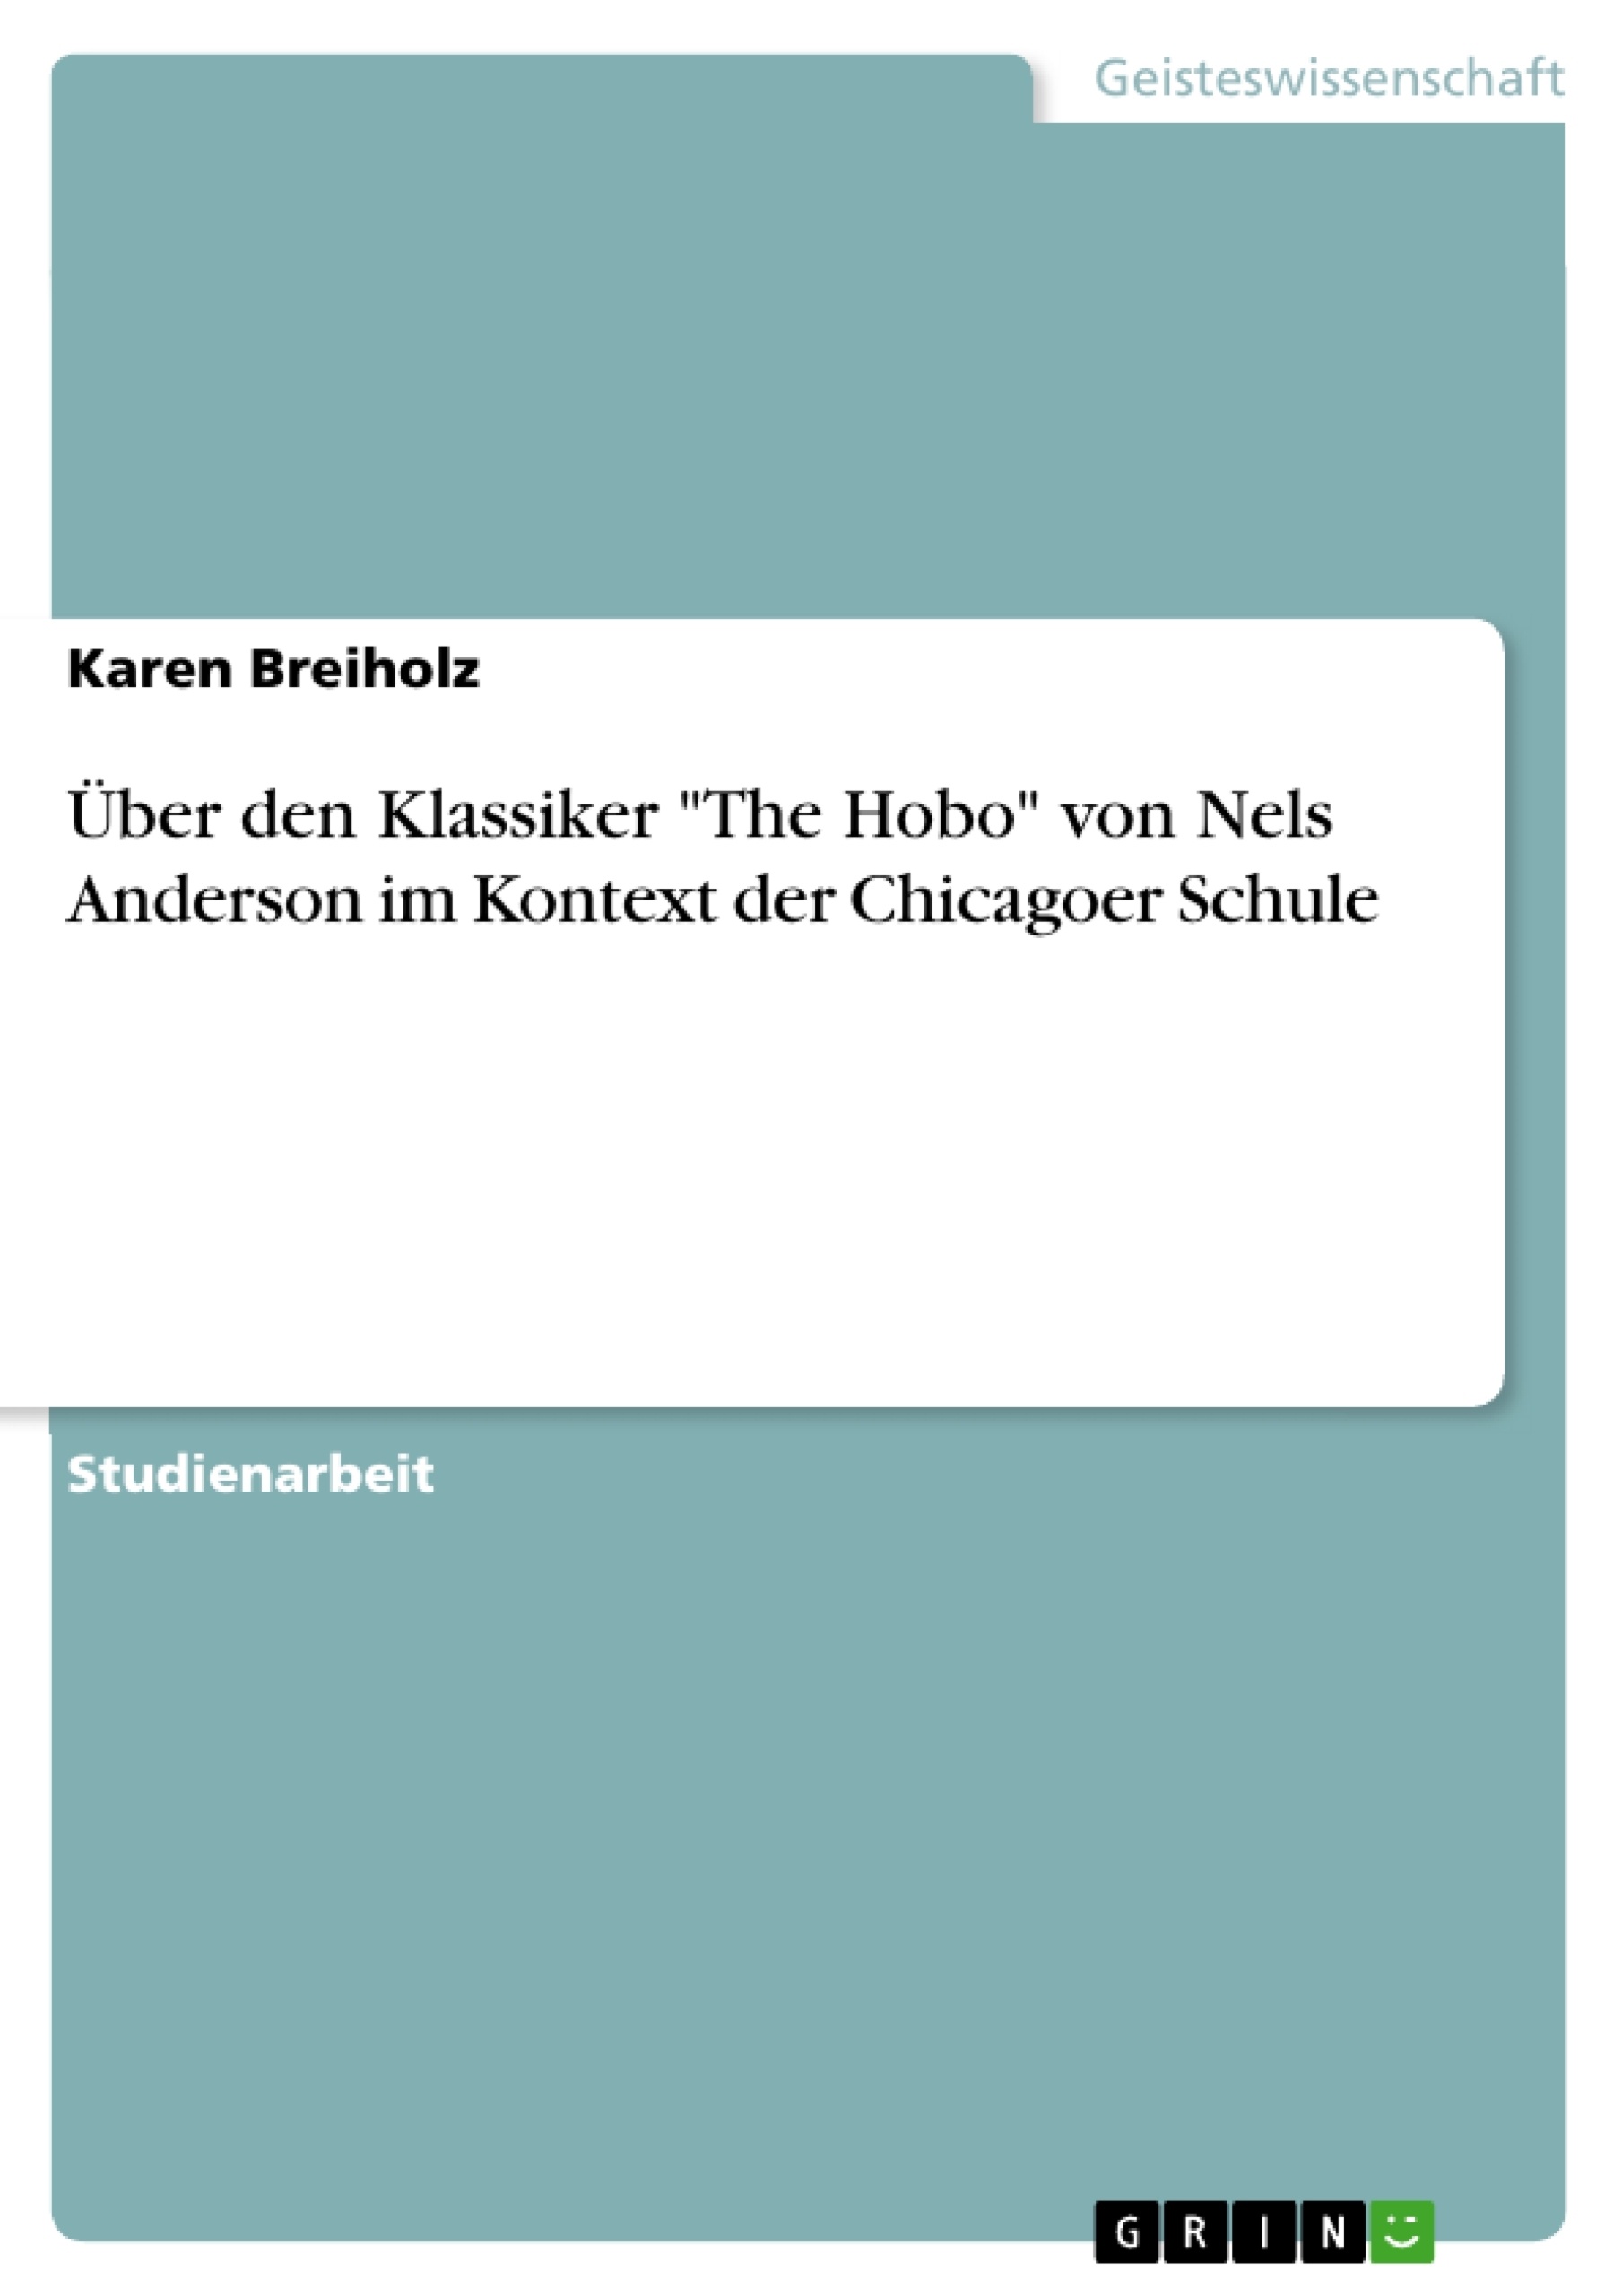 Title: Über den Klassiker "The Hobo" von Nels Anderson im Kontext der Chicagoer Schule